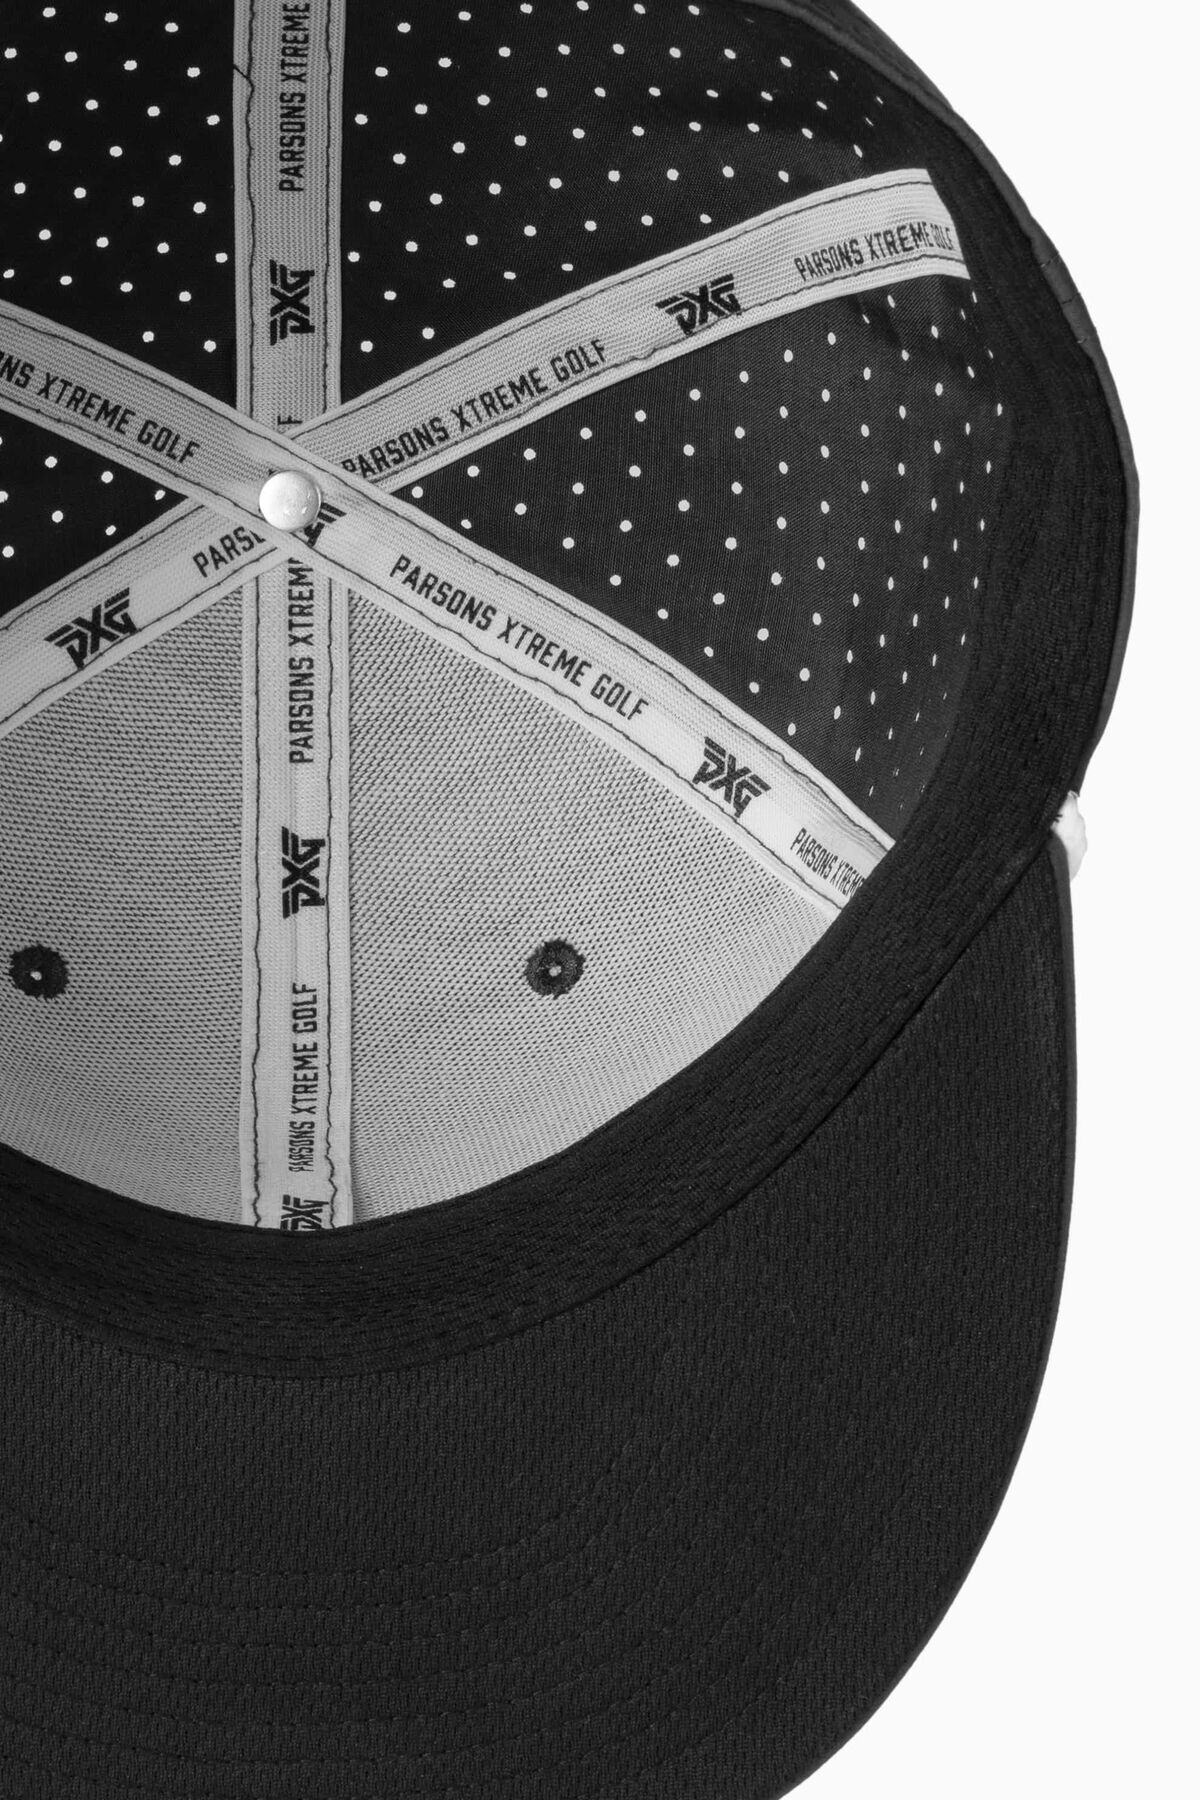 Men's 6-Panel High Crown Snapback Cap - Black/White Logo - One Size Black & White